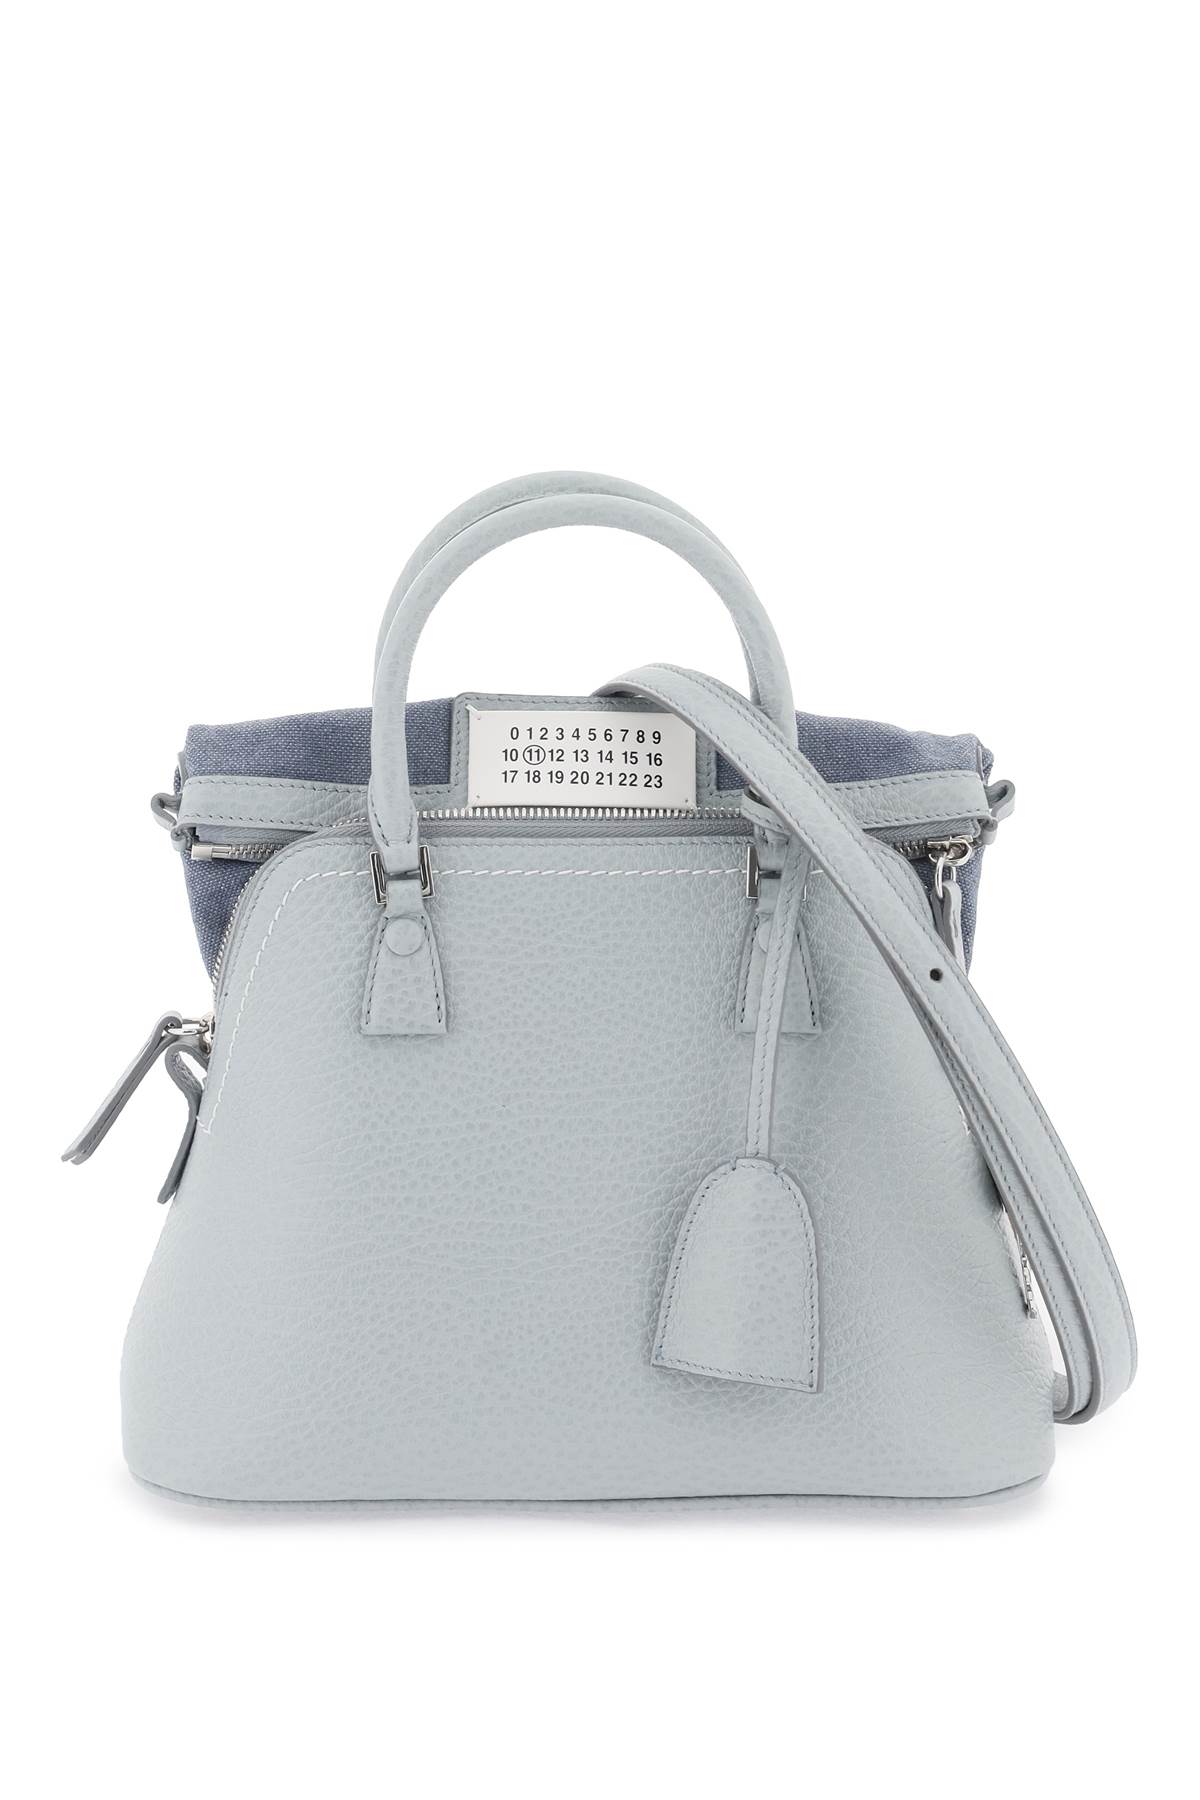 Maison Margiela 5ac Classique Handbag In Mist (grey)